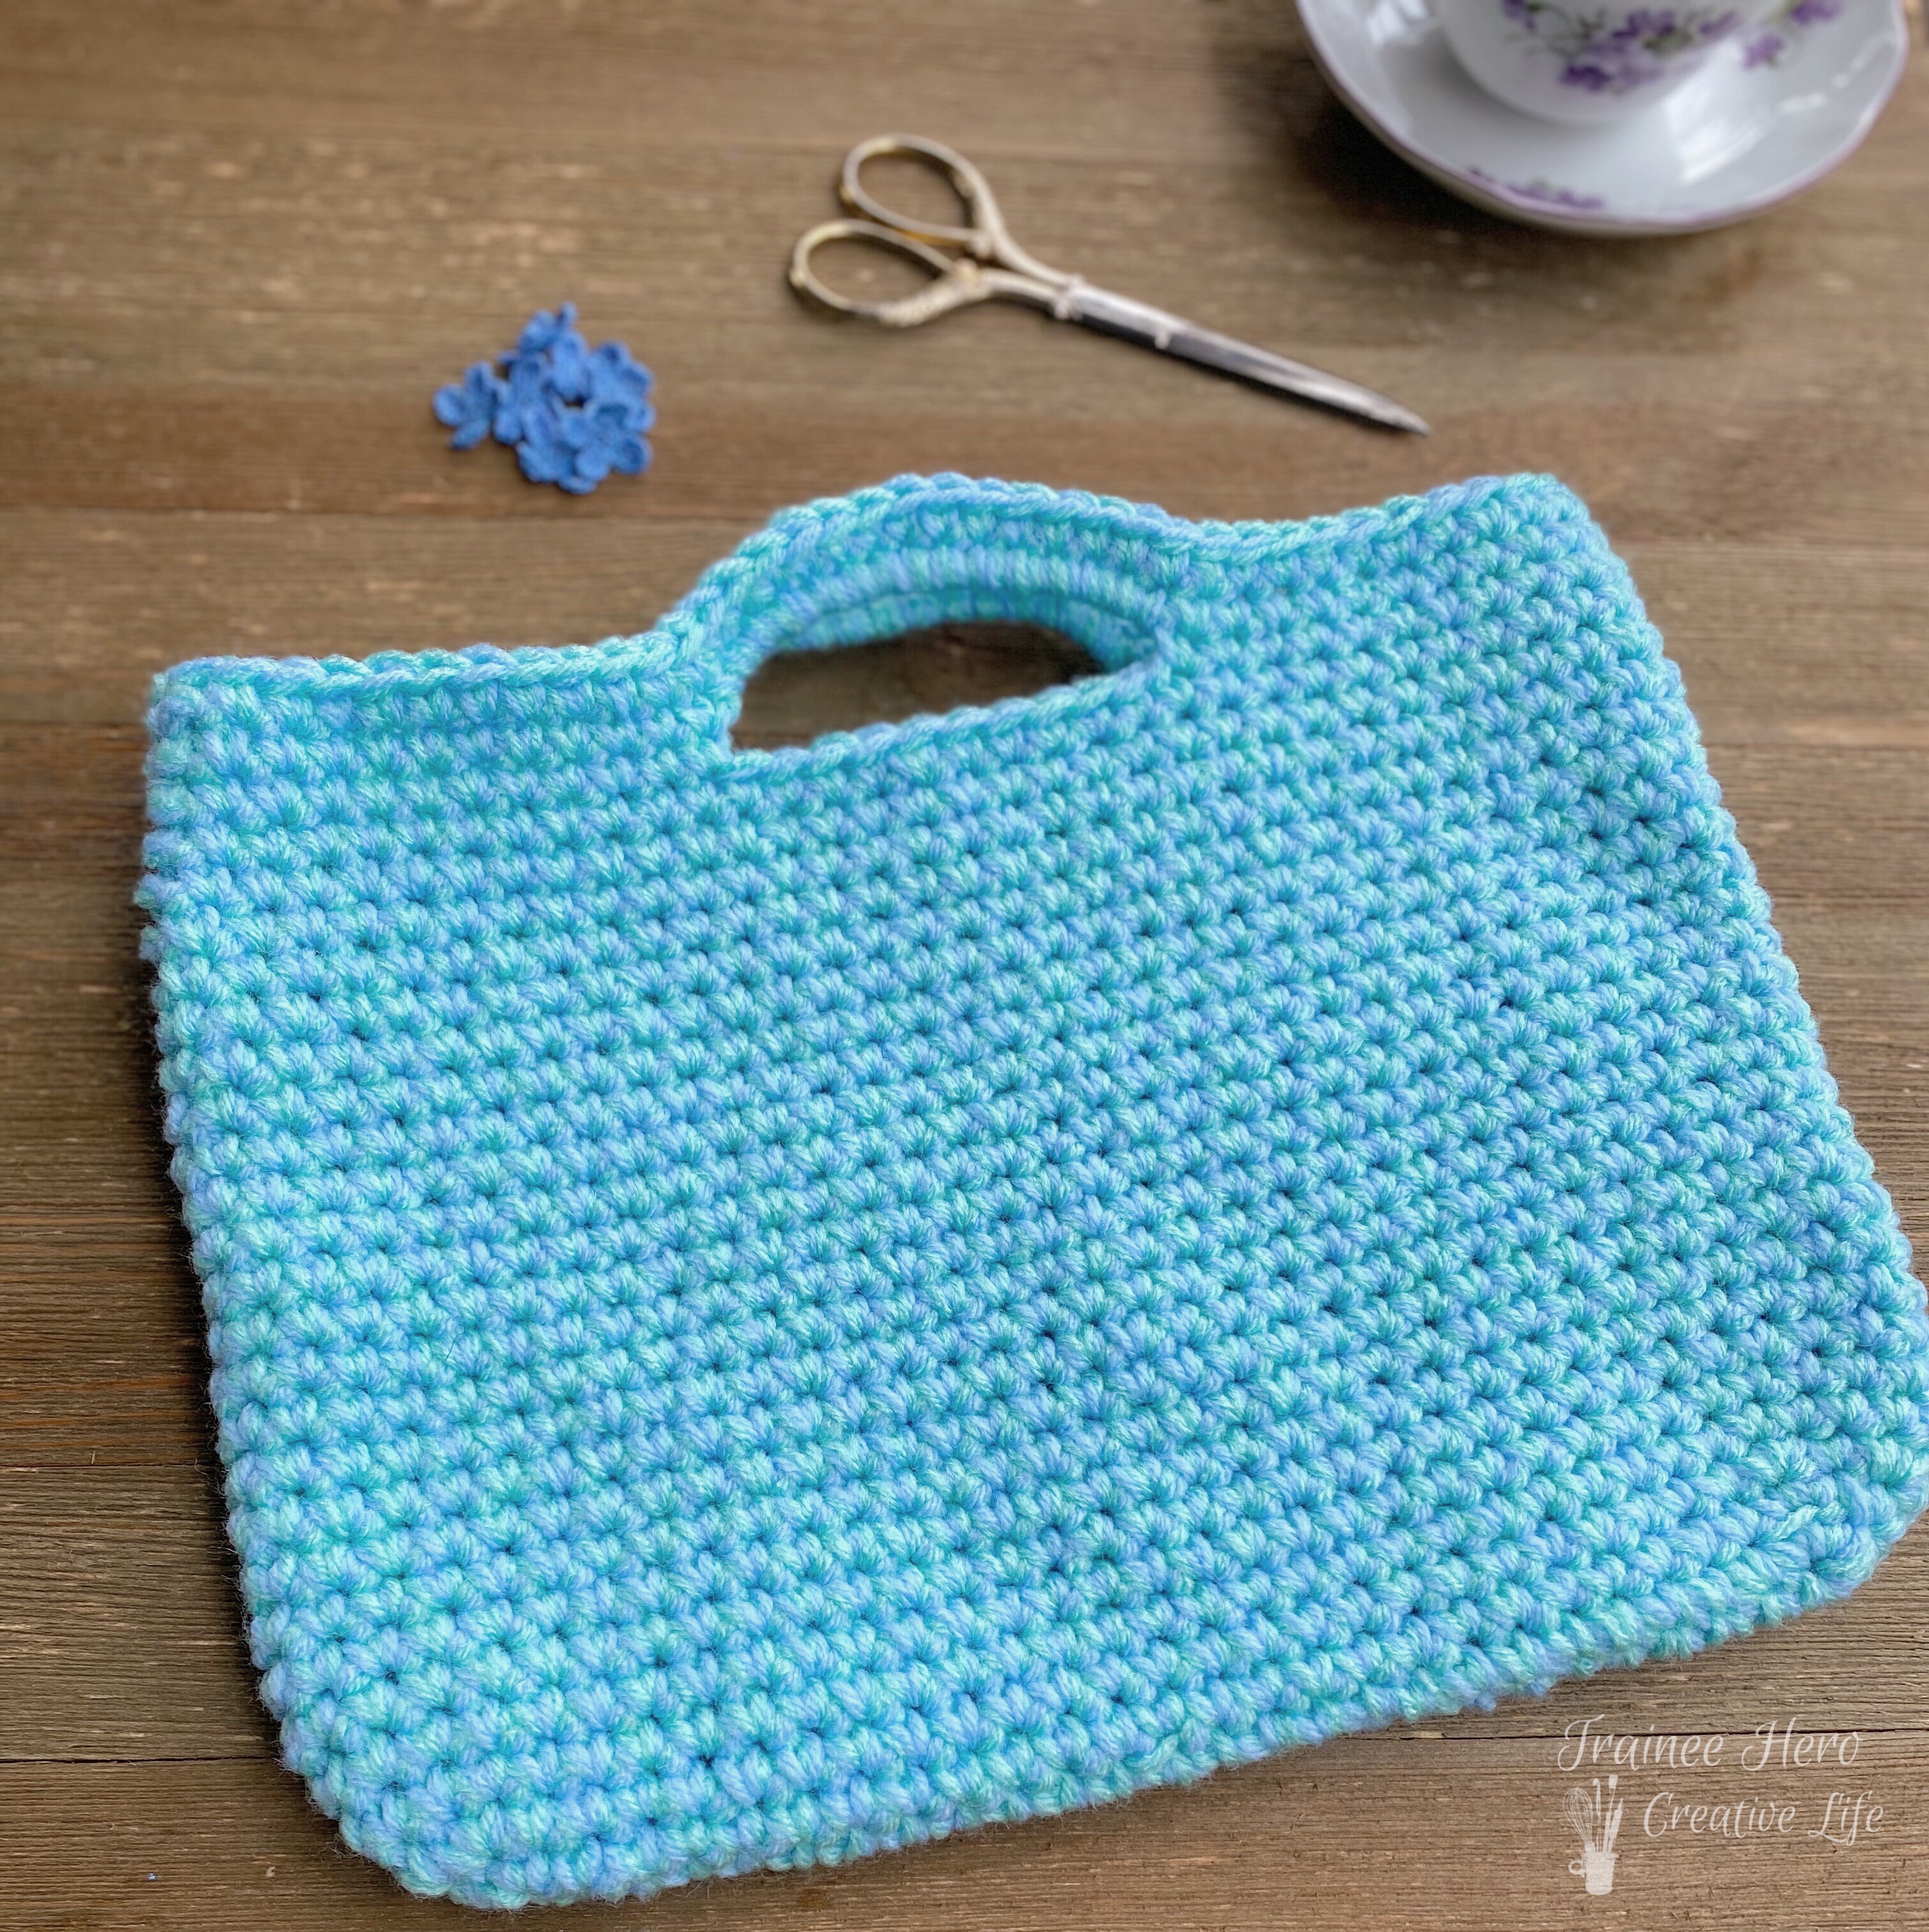 One crochet project bag.